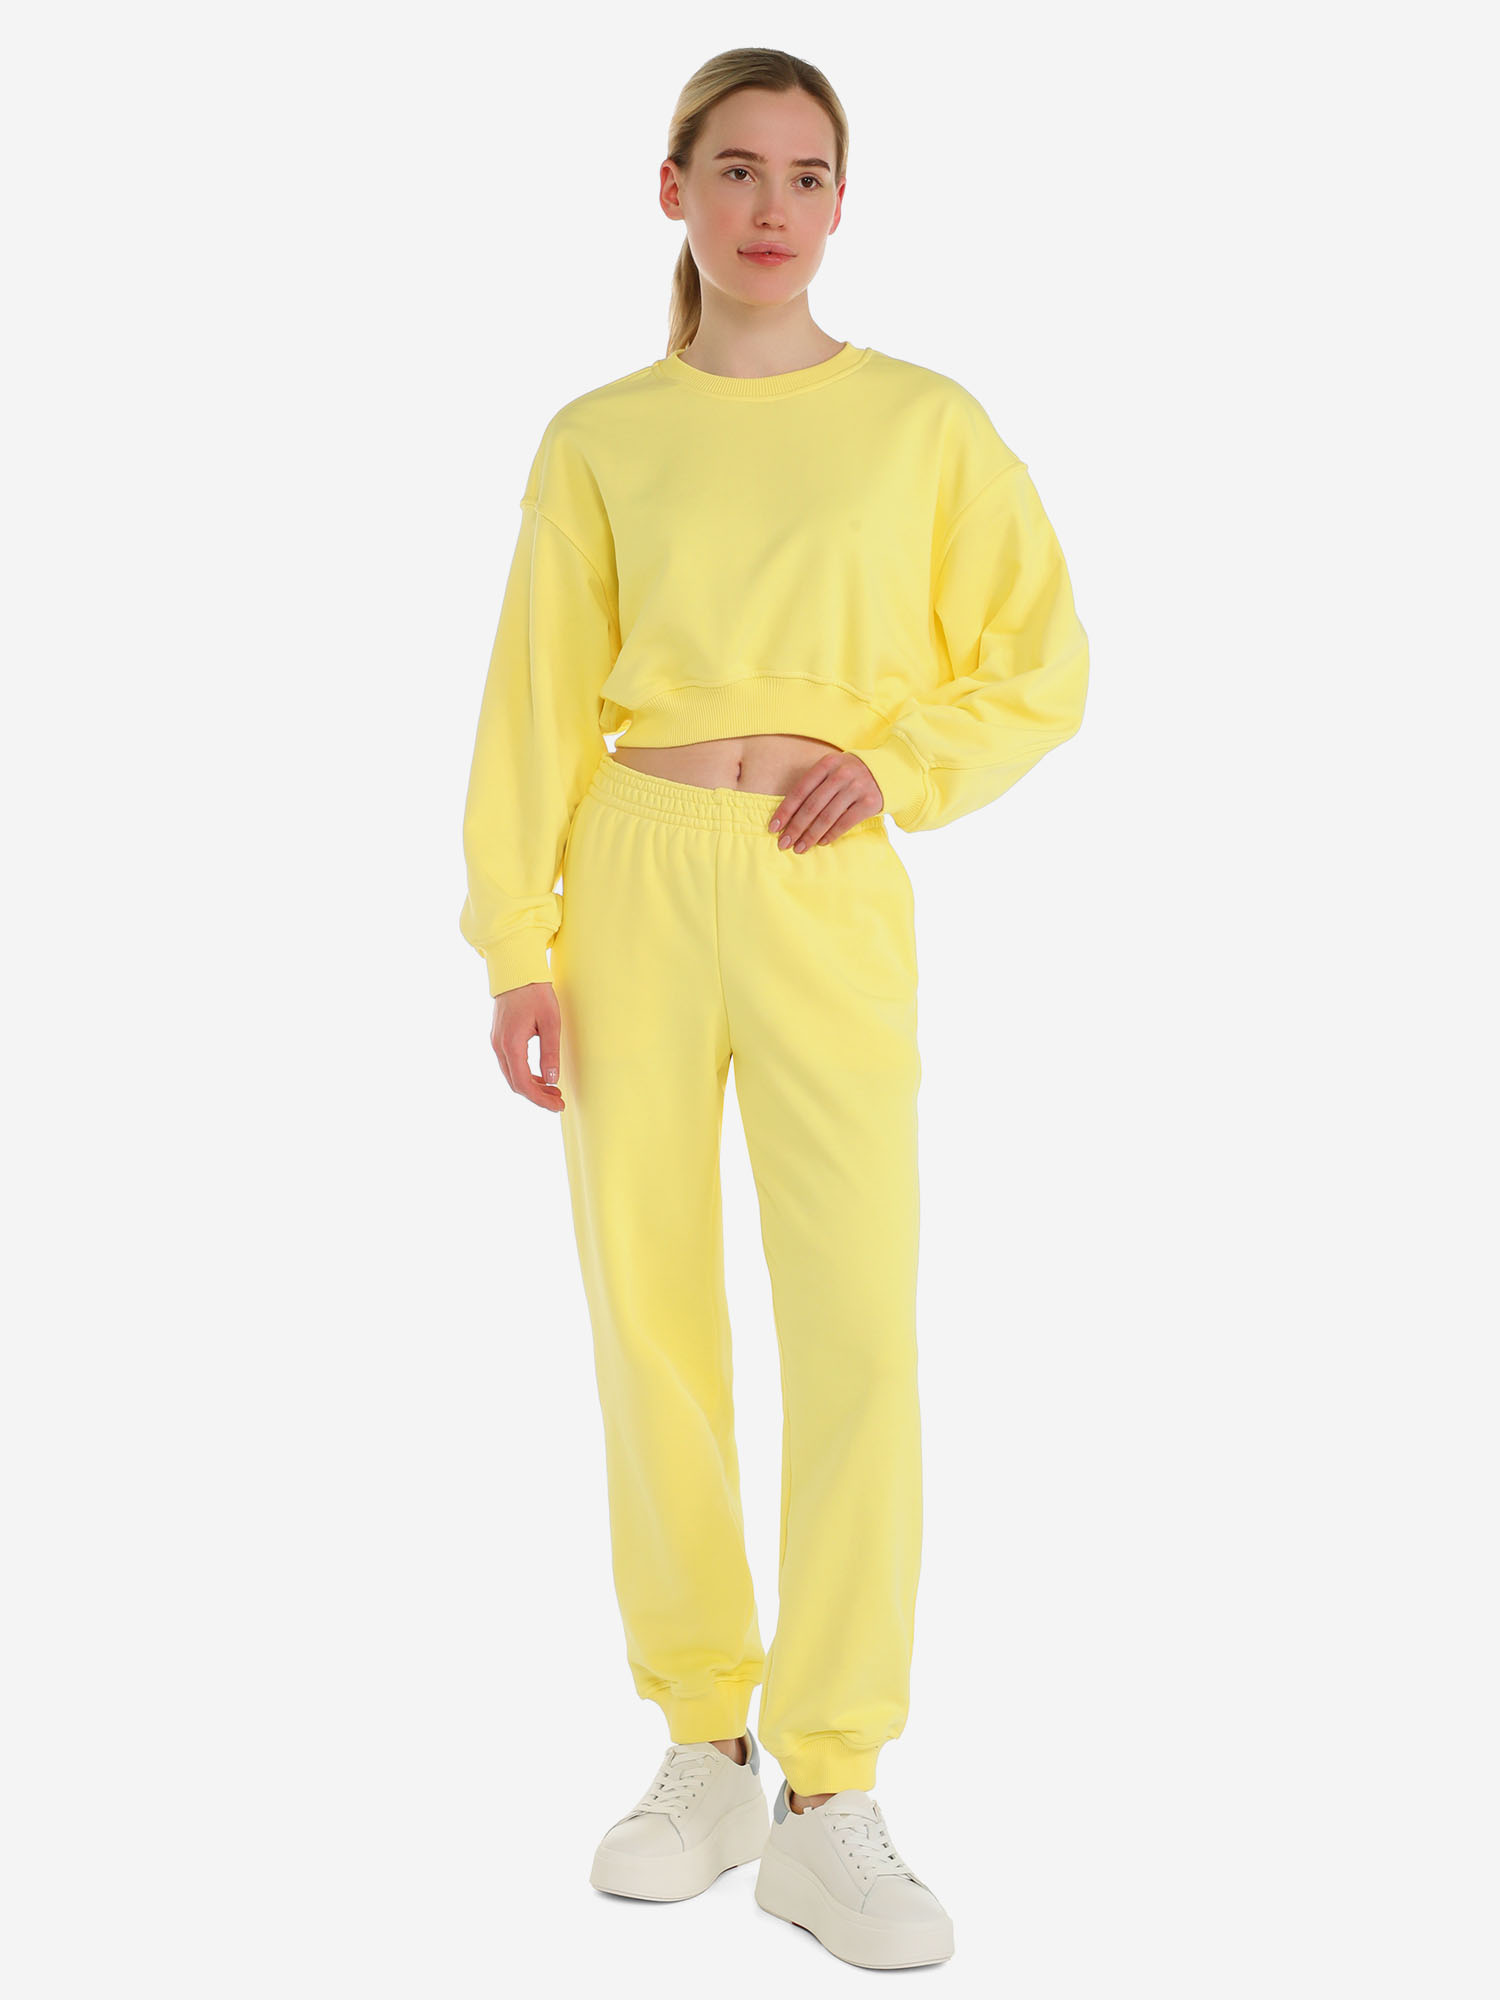 Спортивный костюм (джоггеры и свишот) женский CALZETTI, Желтый